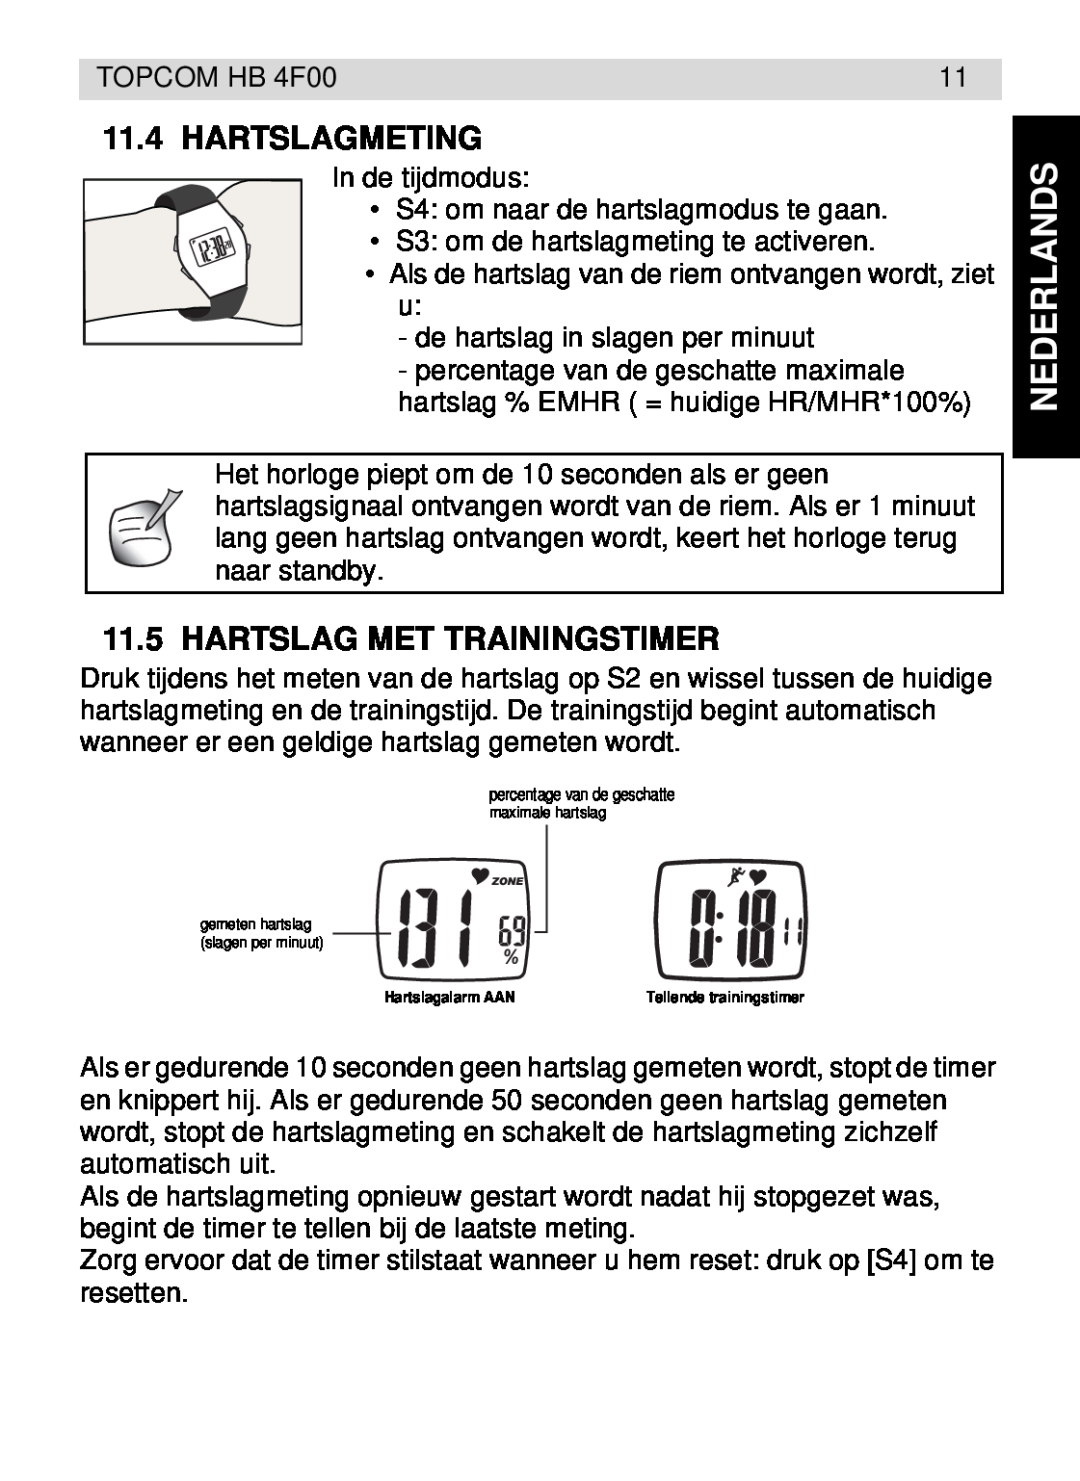 Topcom HB 4F00 manual Hartslagmeting, Hartslag Met Trainingstimer, Nederlands, percentage van de geschatte 